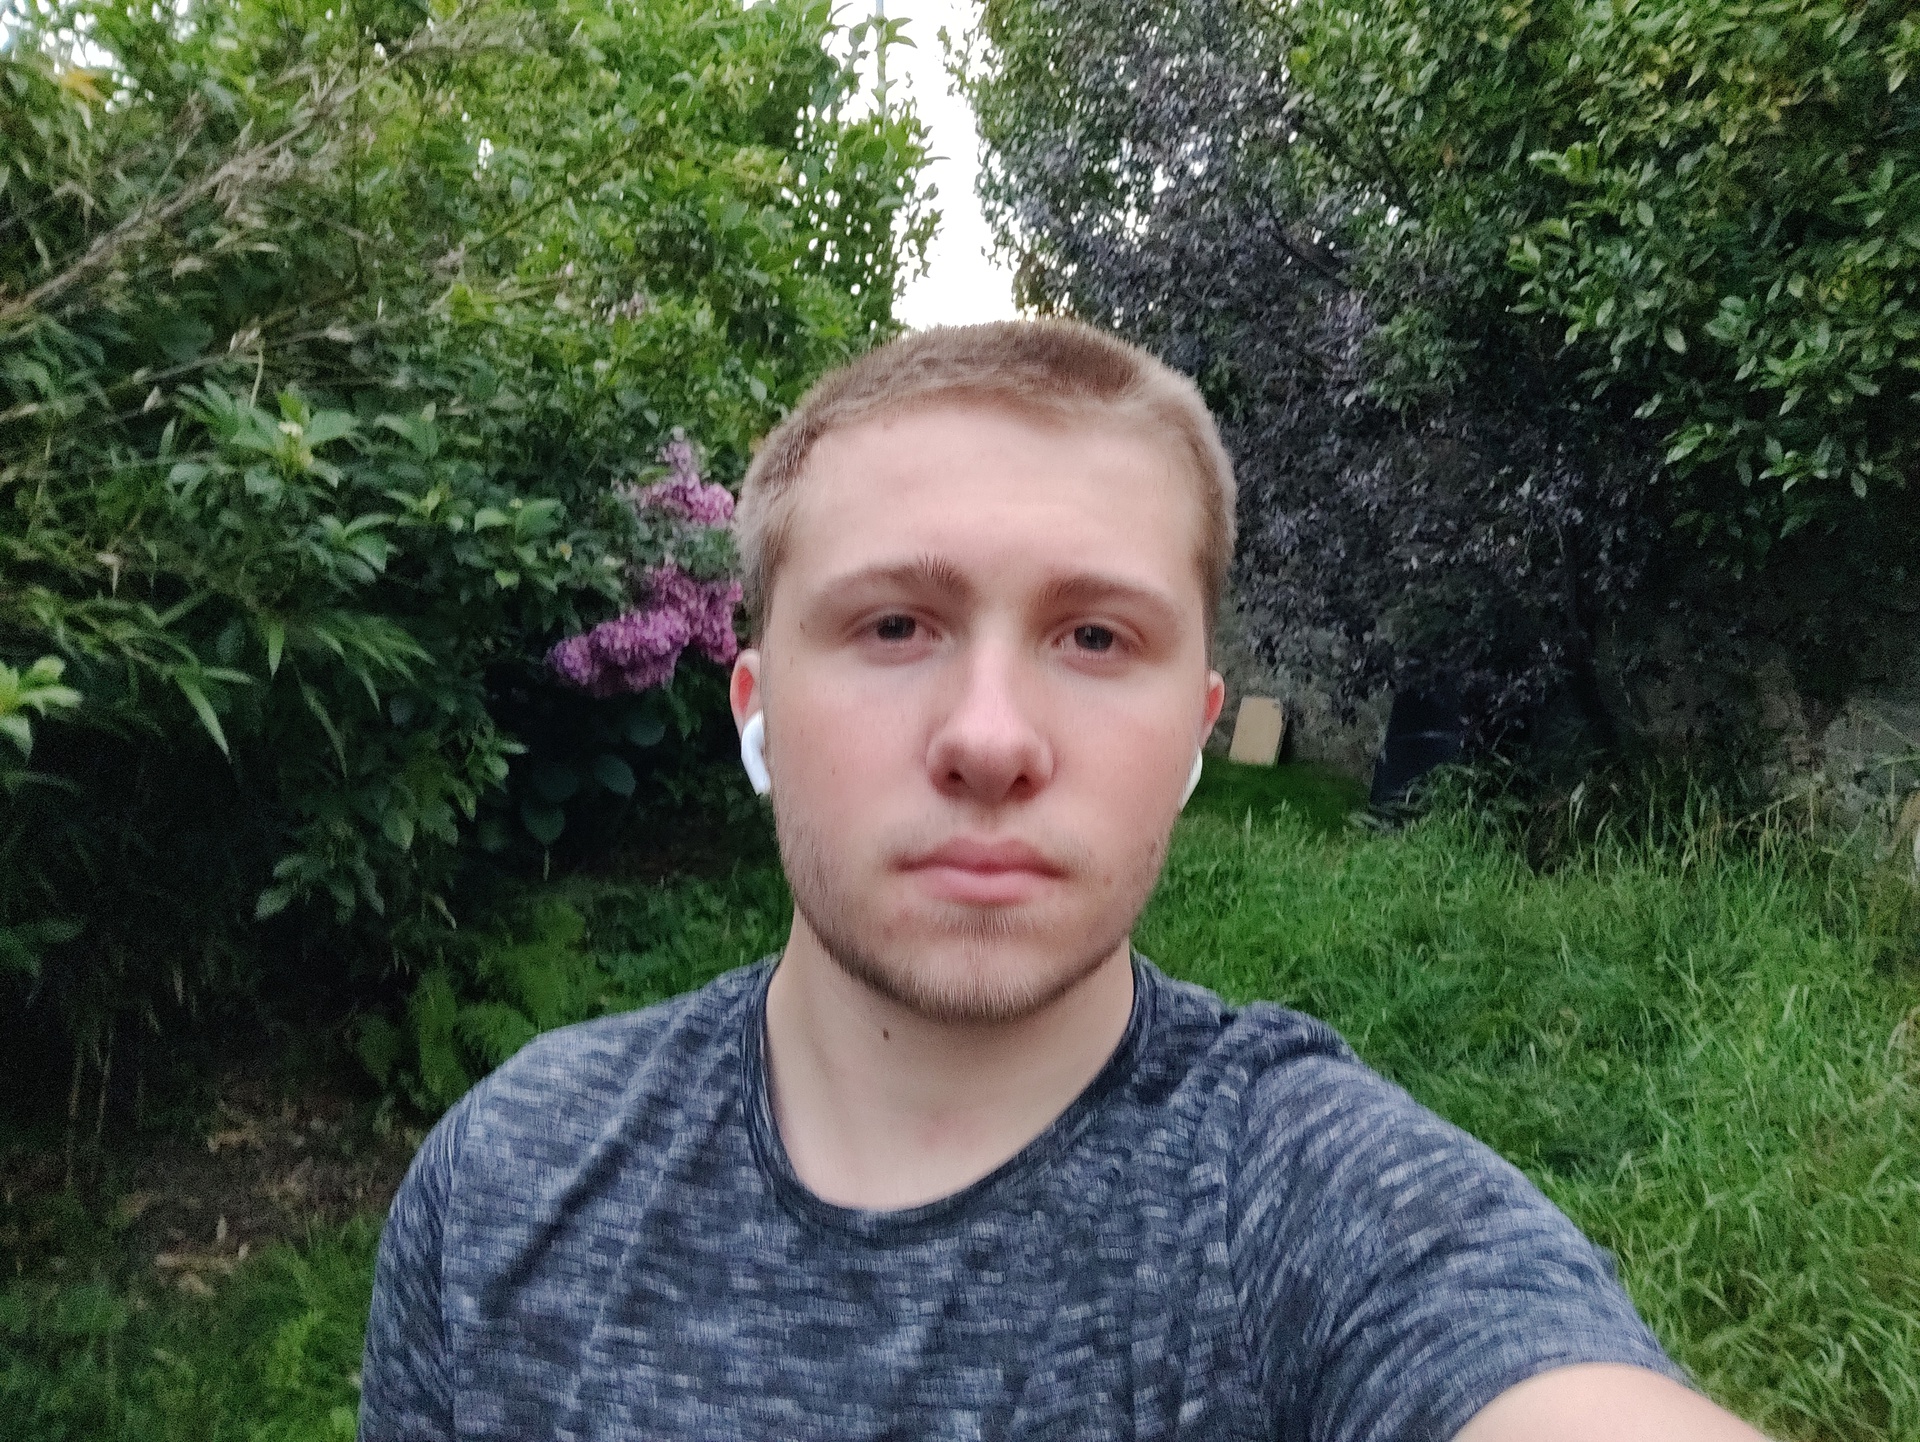 OnePlus Nord测试图像自拍照在花园中